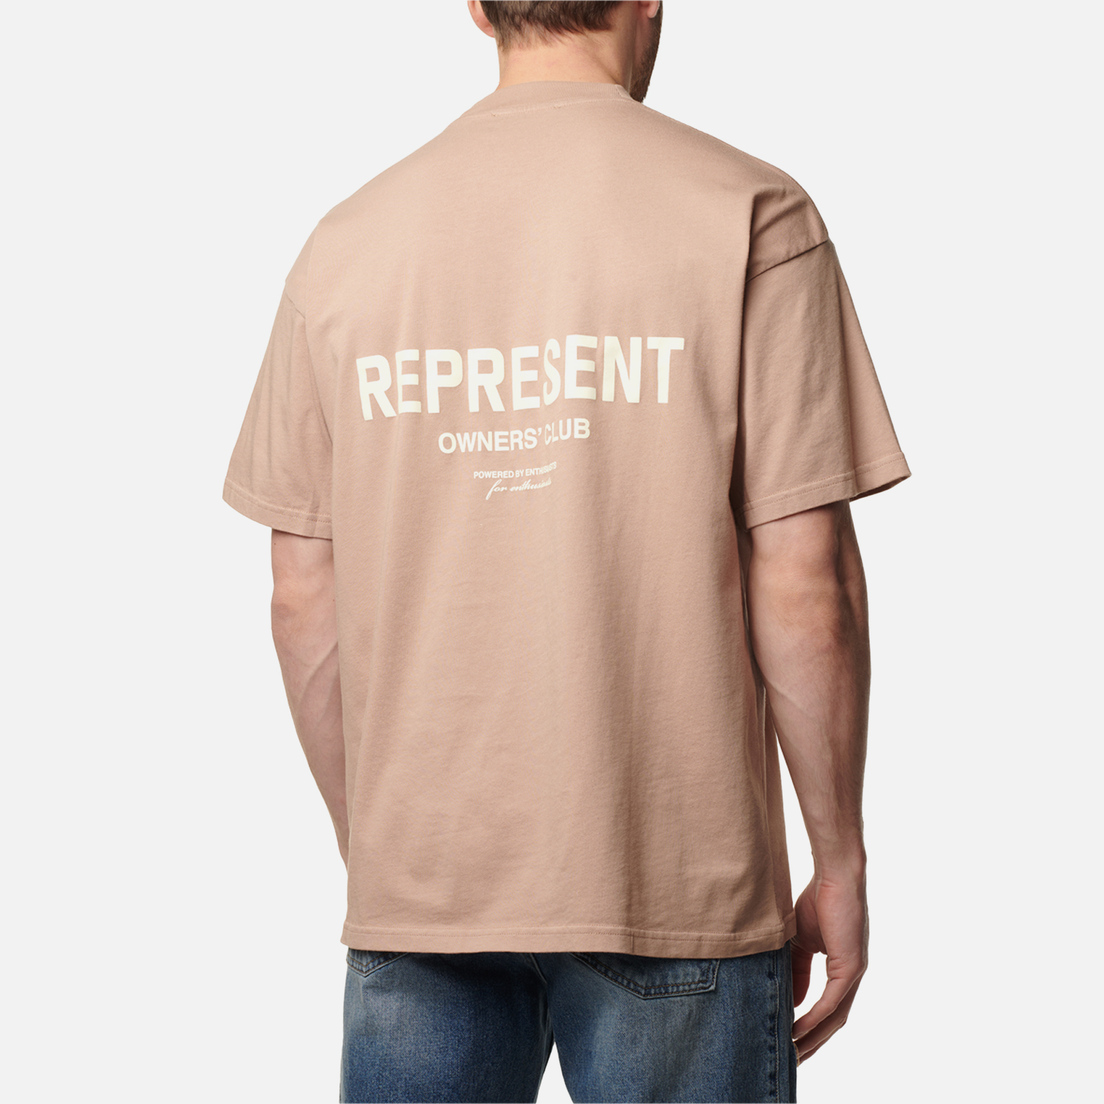 REPRESENT Мужская футболка Represent Owners Club